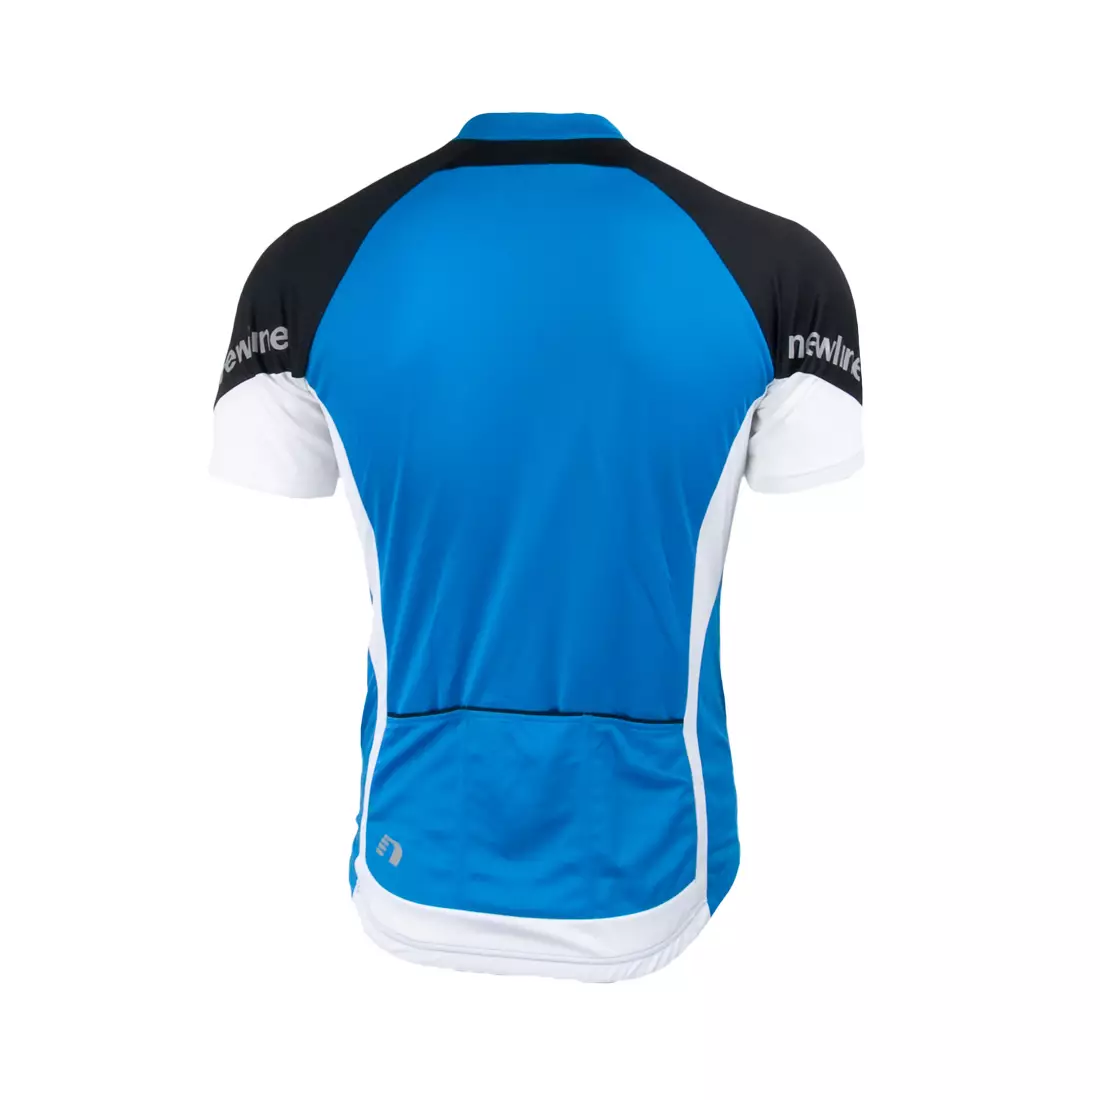 NEWLINE BIKE JERSEY - men's cycling jersey 21517-016